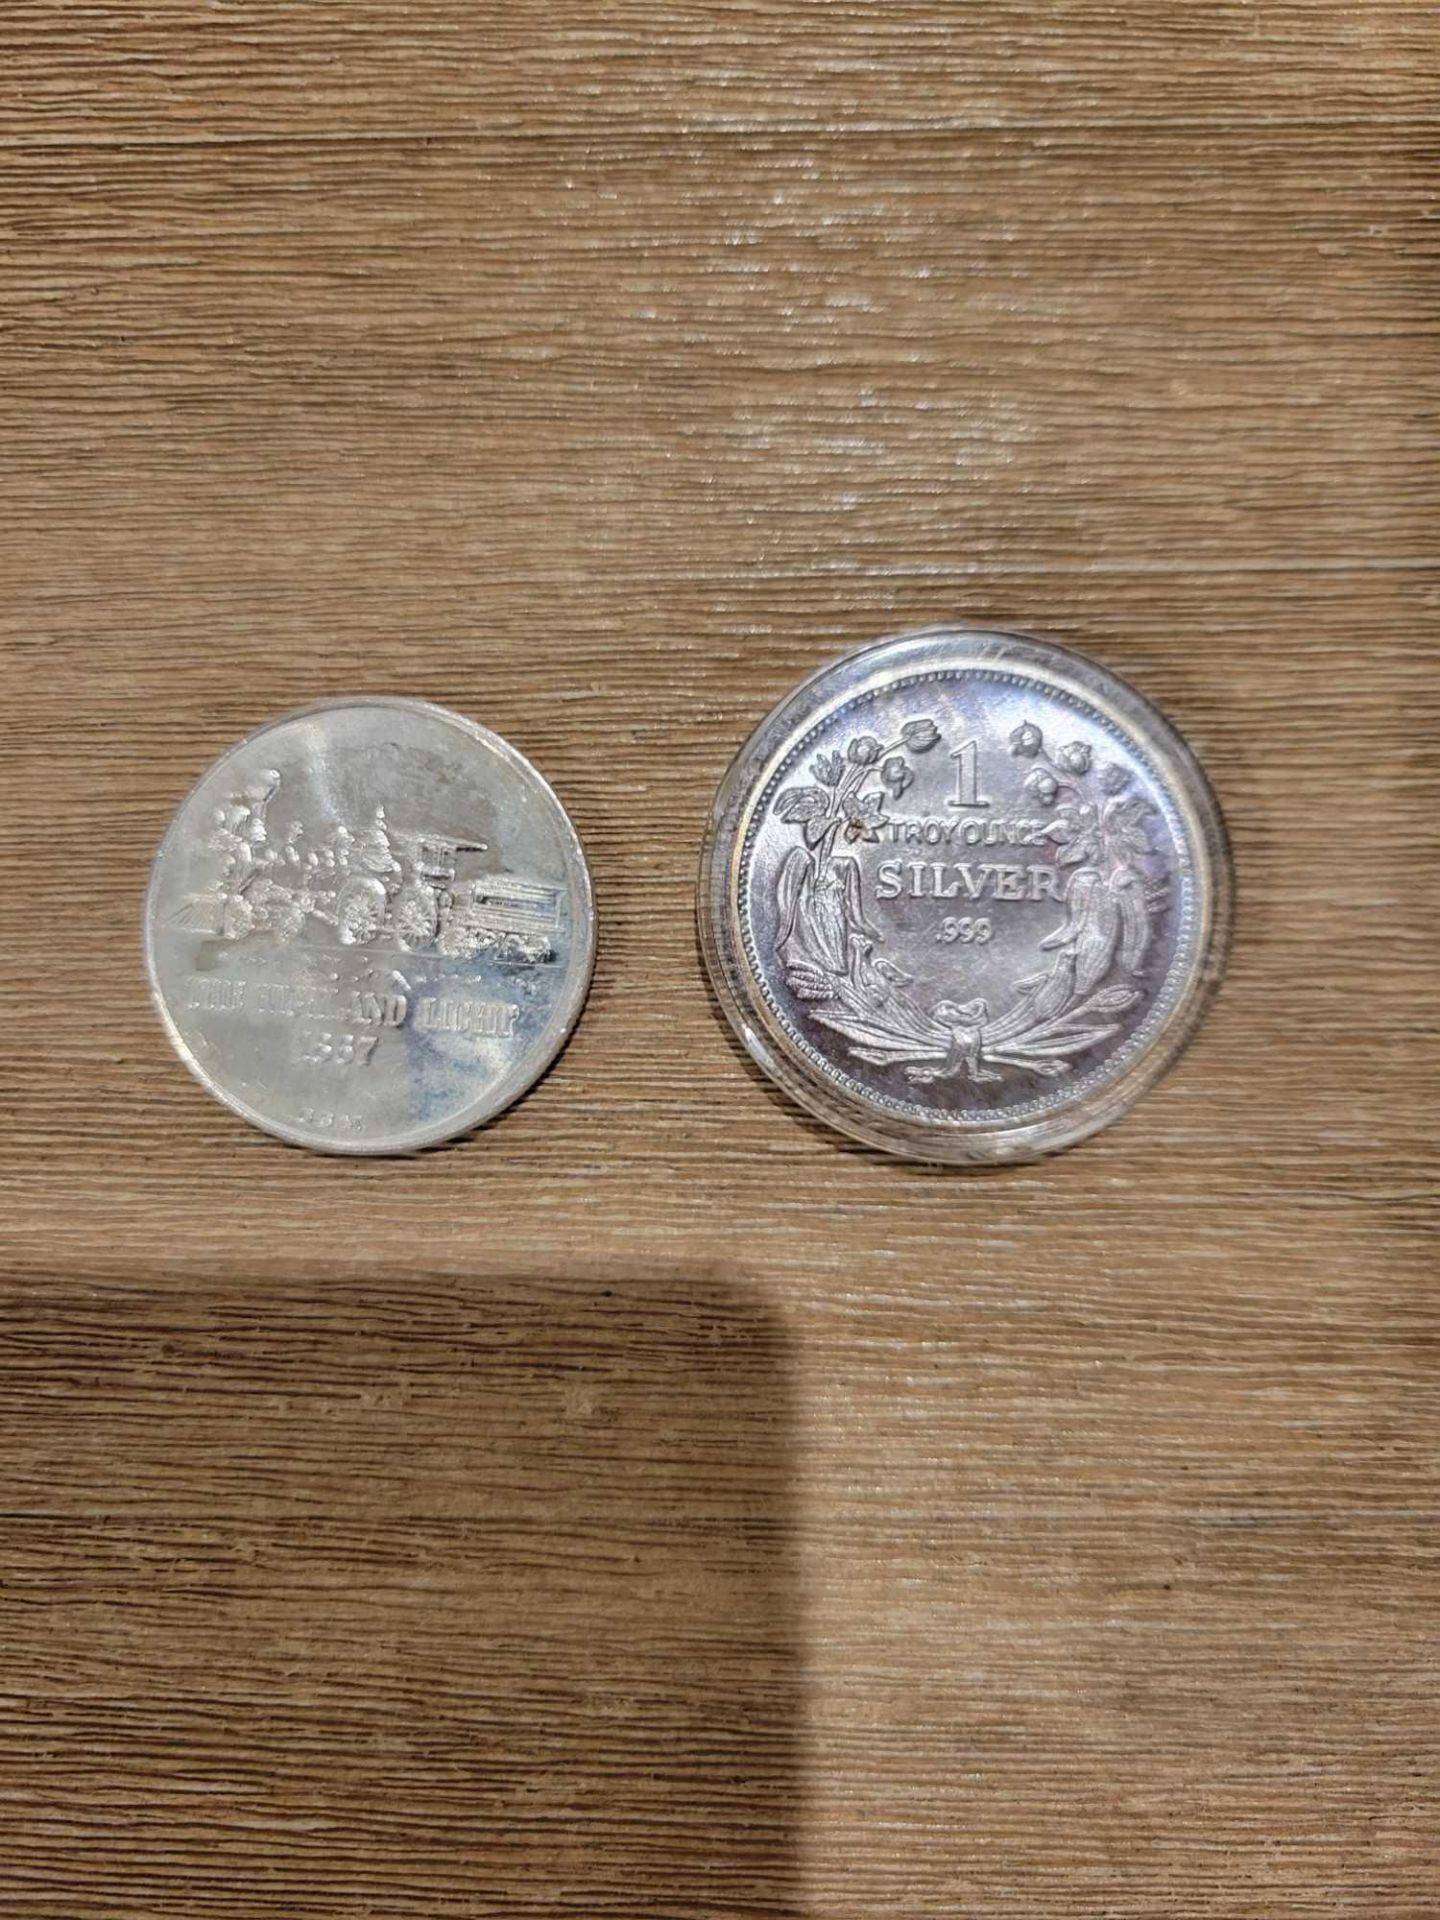 2 Vintage Silver Coins